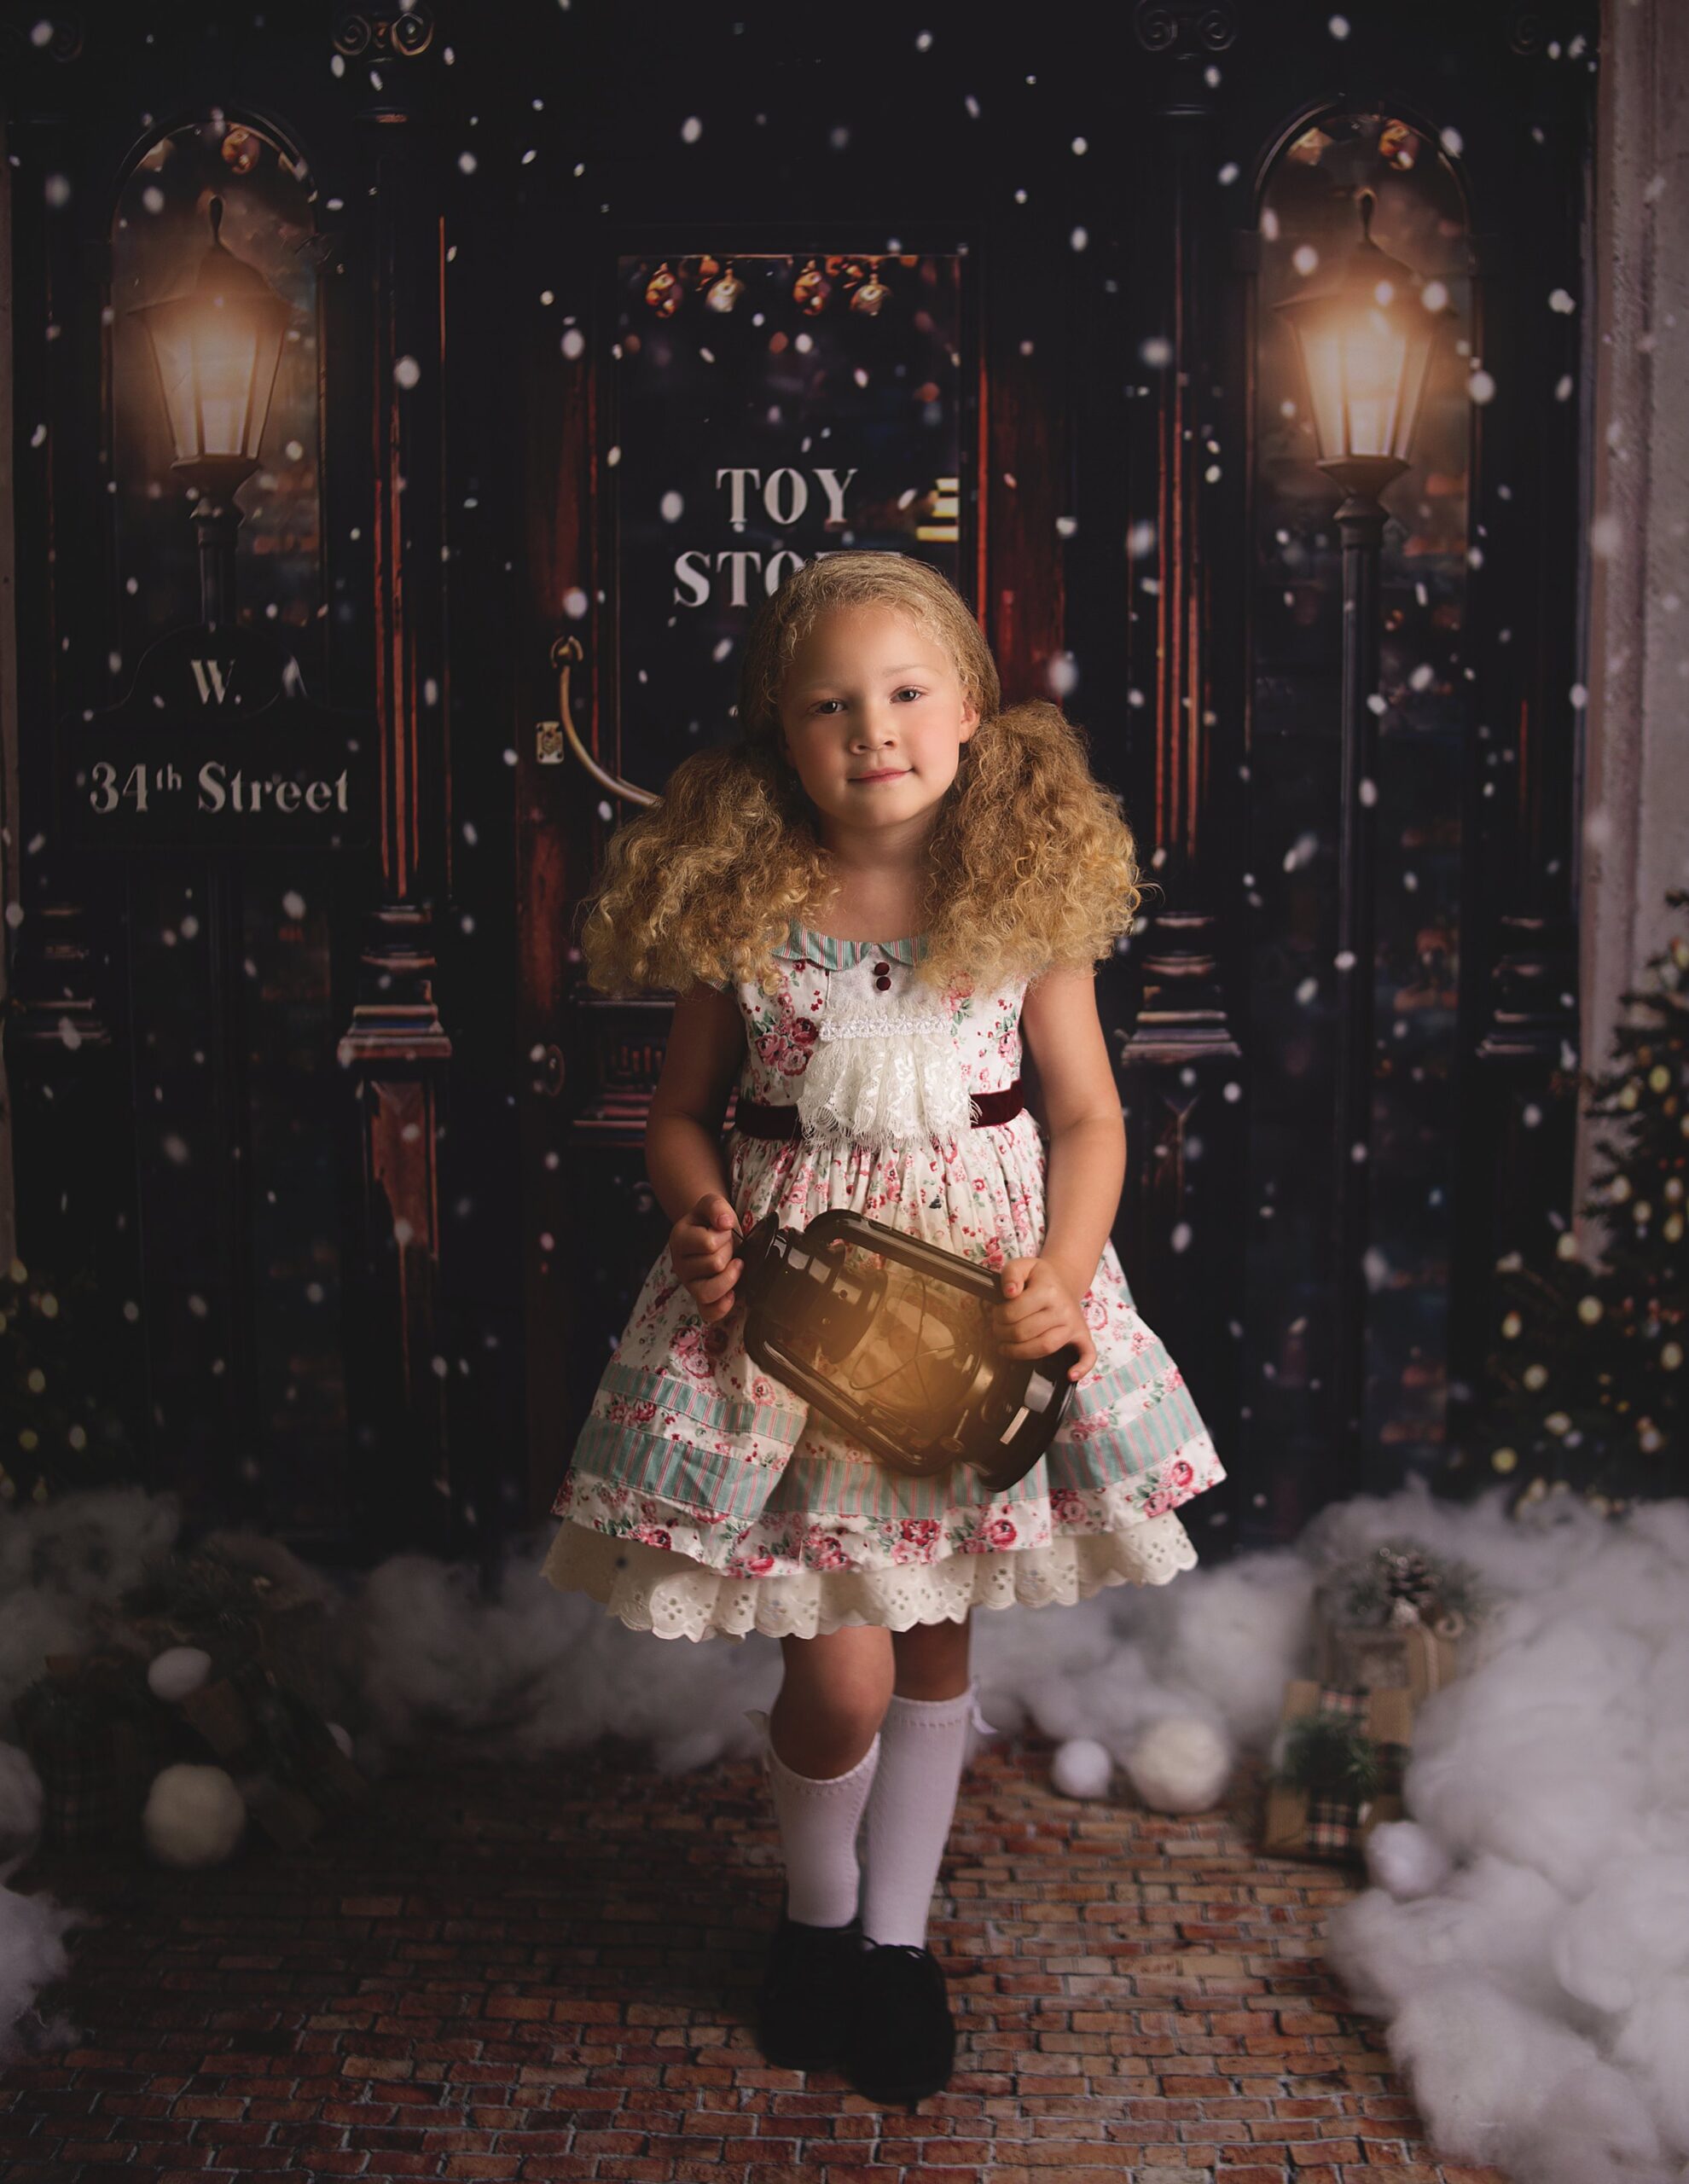 Little girl holding lantern, toy stor, christmas photos, Franklin Tennessee Photographer